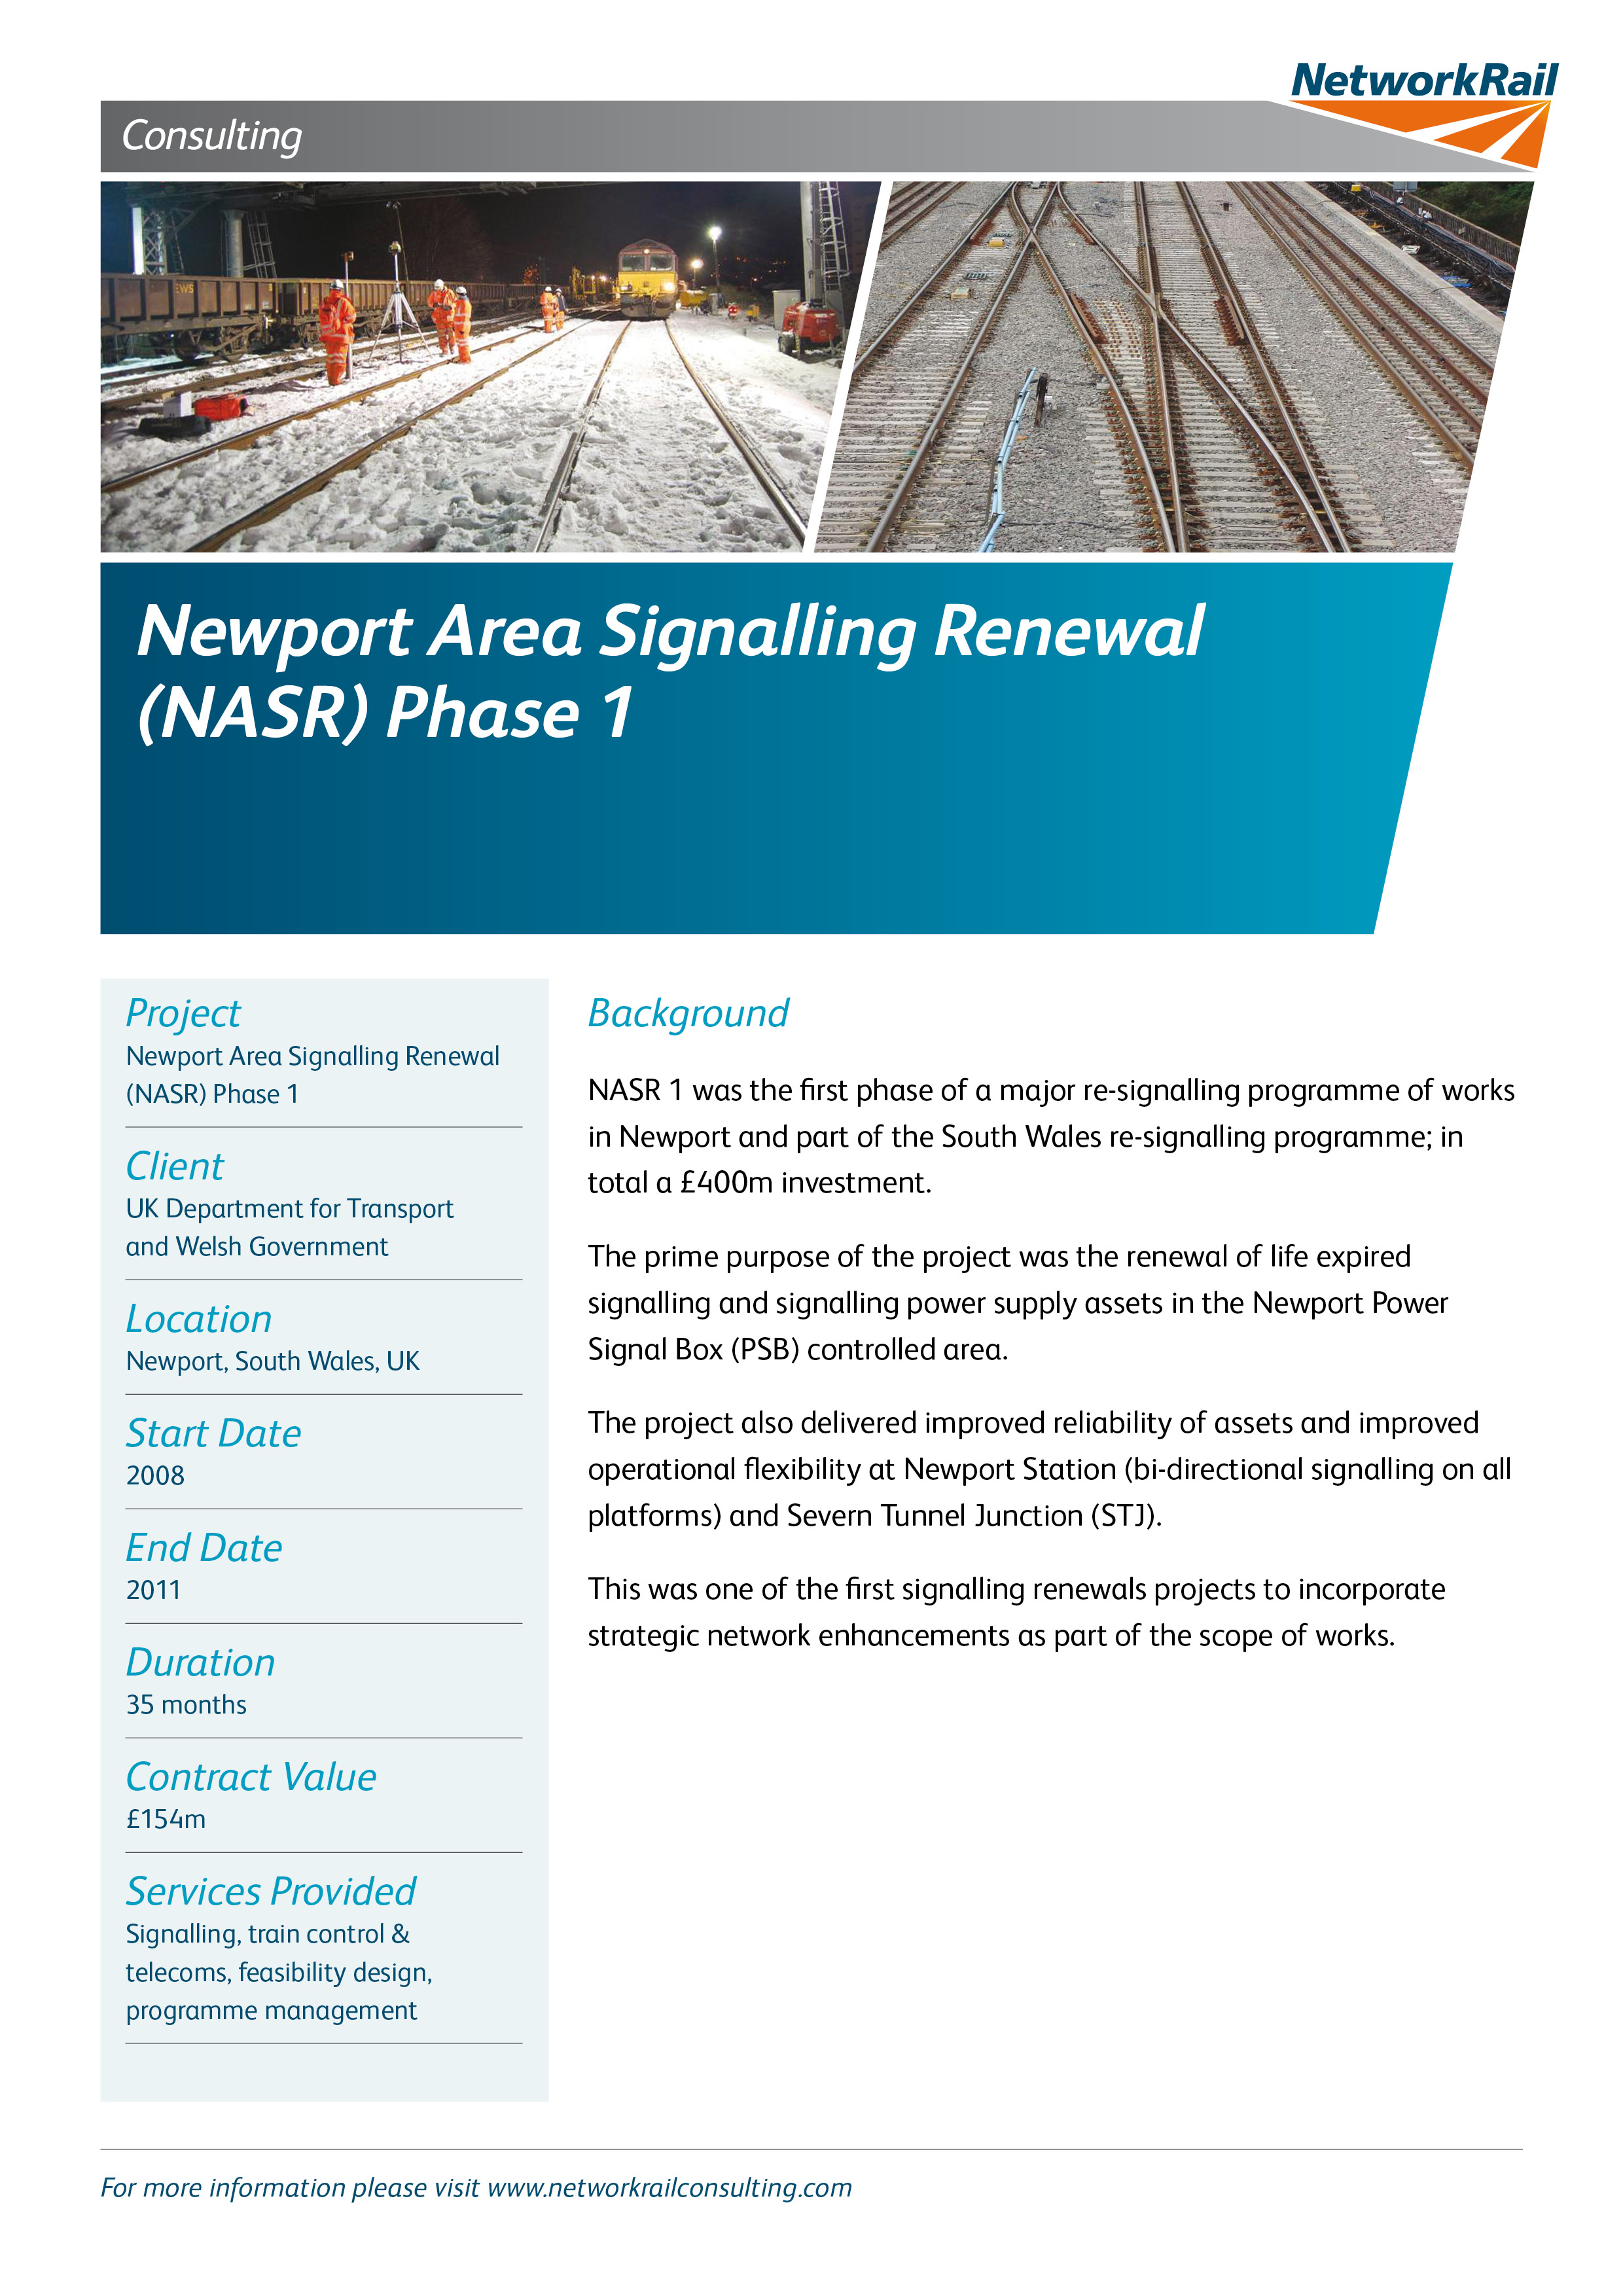 Newport Area Signalling Renewal NASR Phase 1